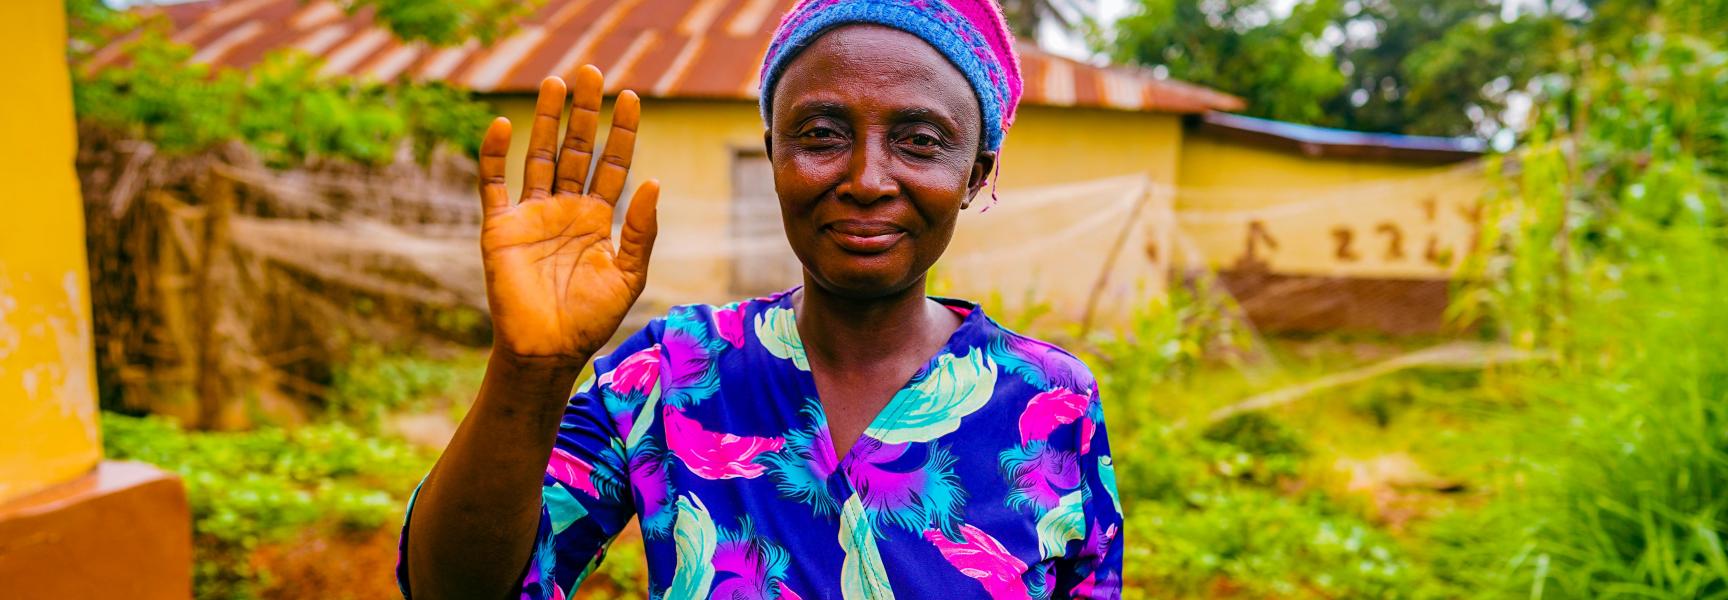 Une agricultrice de Sierra Leone dans son jardin